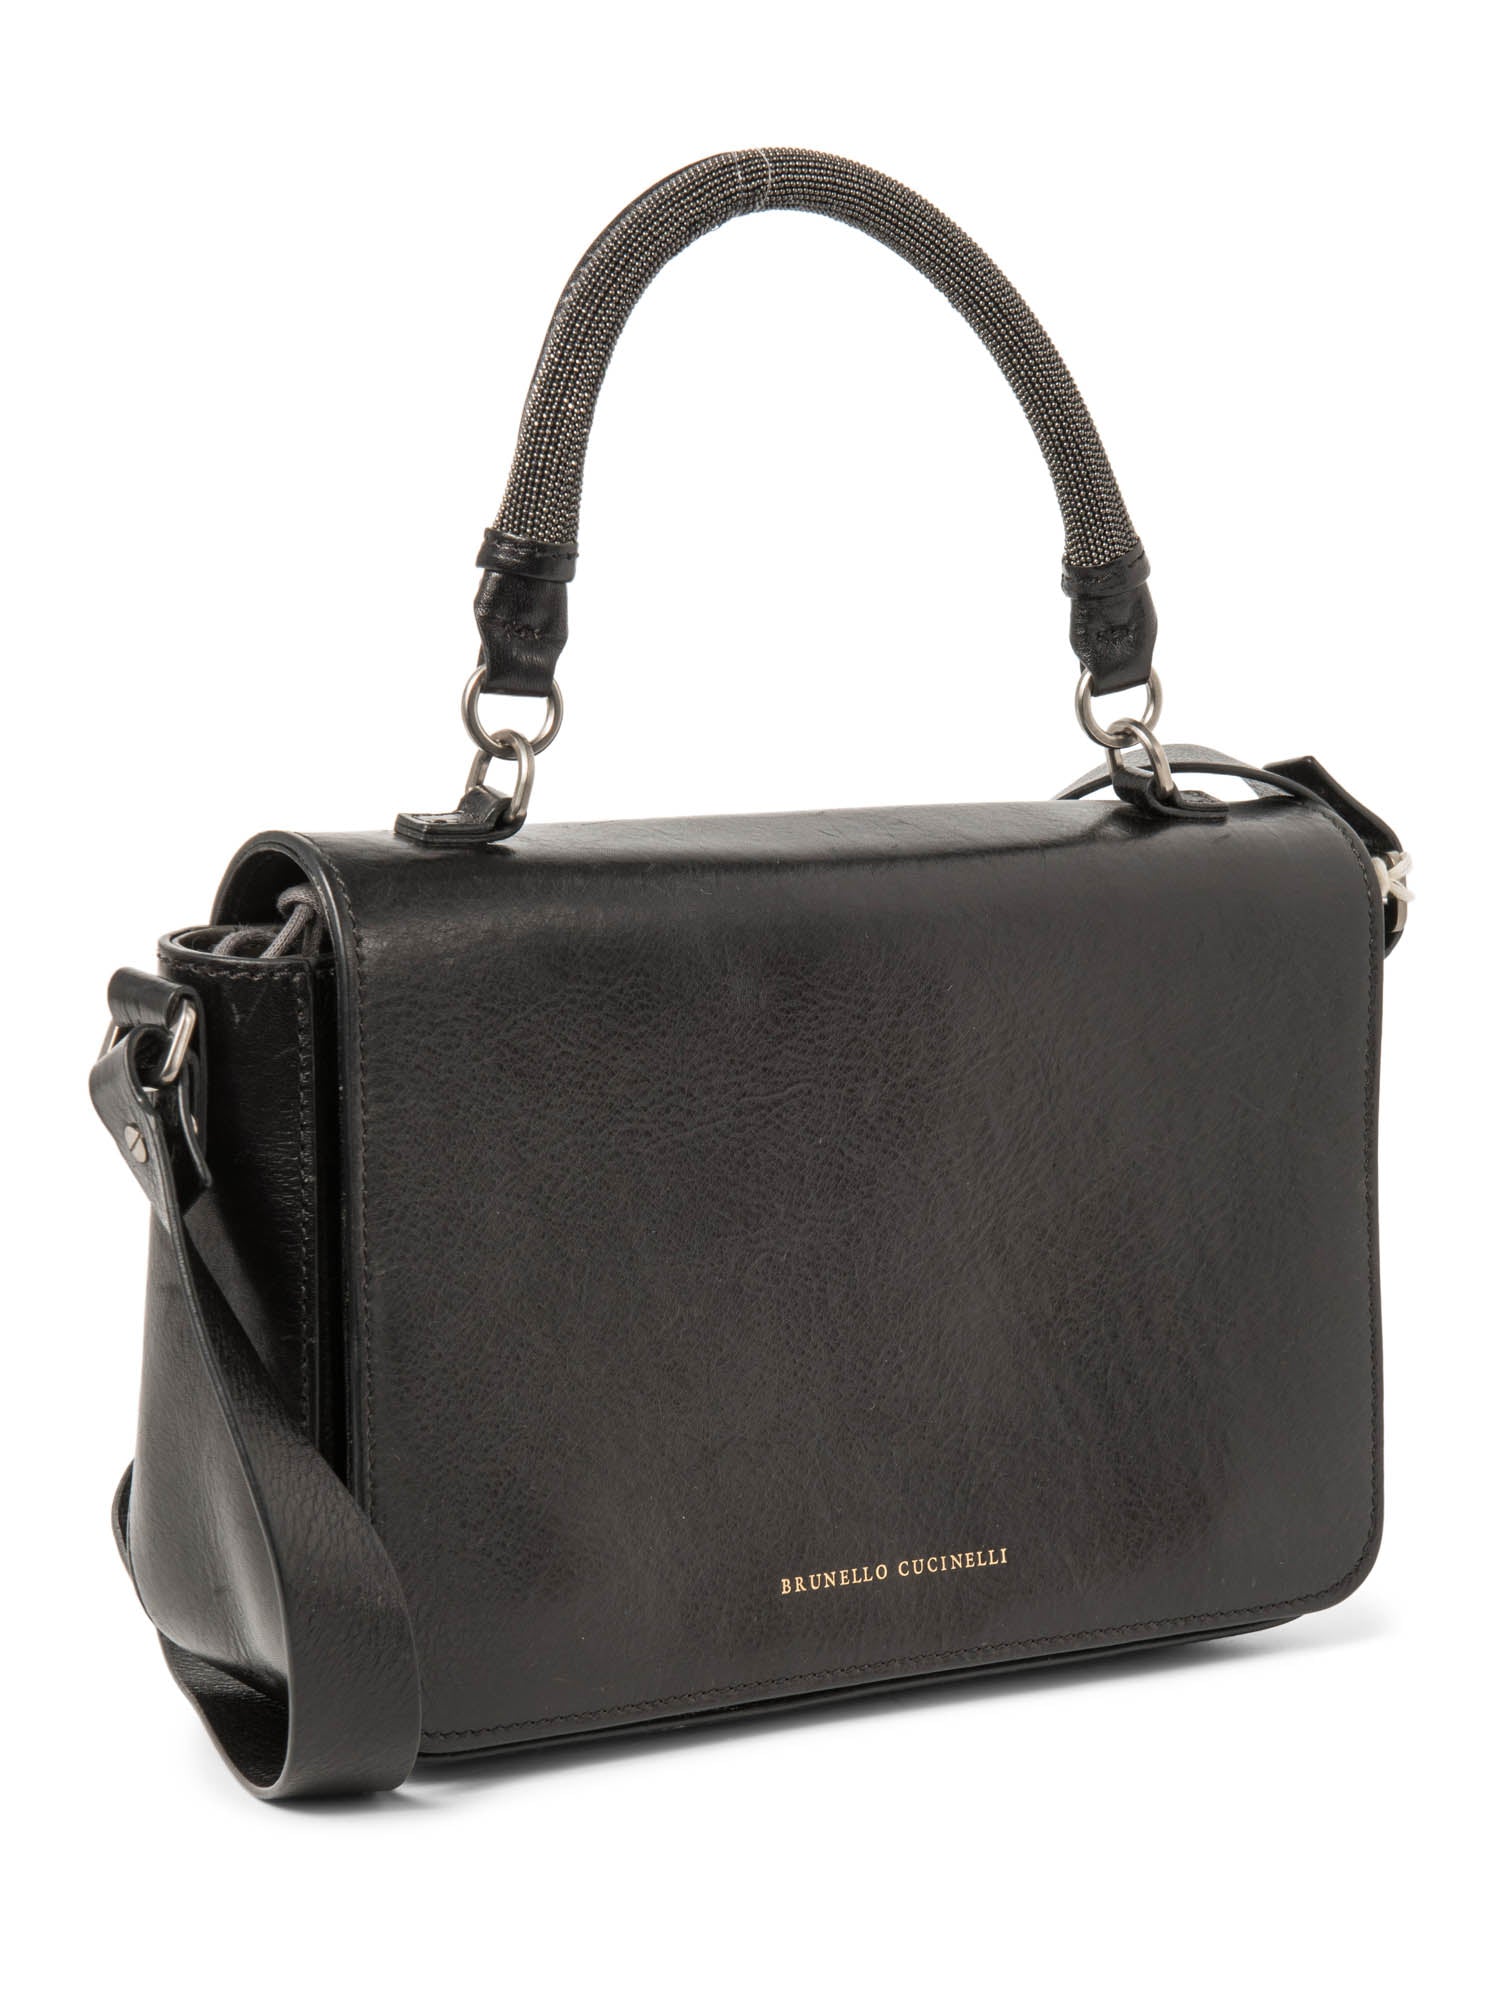 Brunello Cucinelli Leather Monili Top Handle Messenger Bag Black